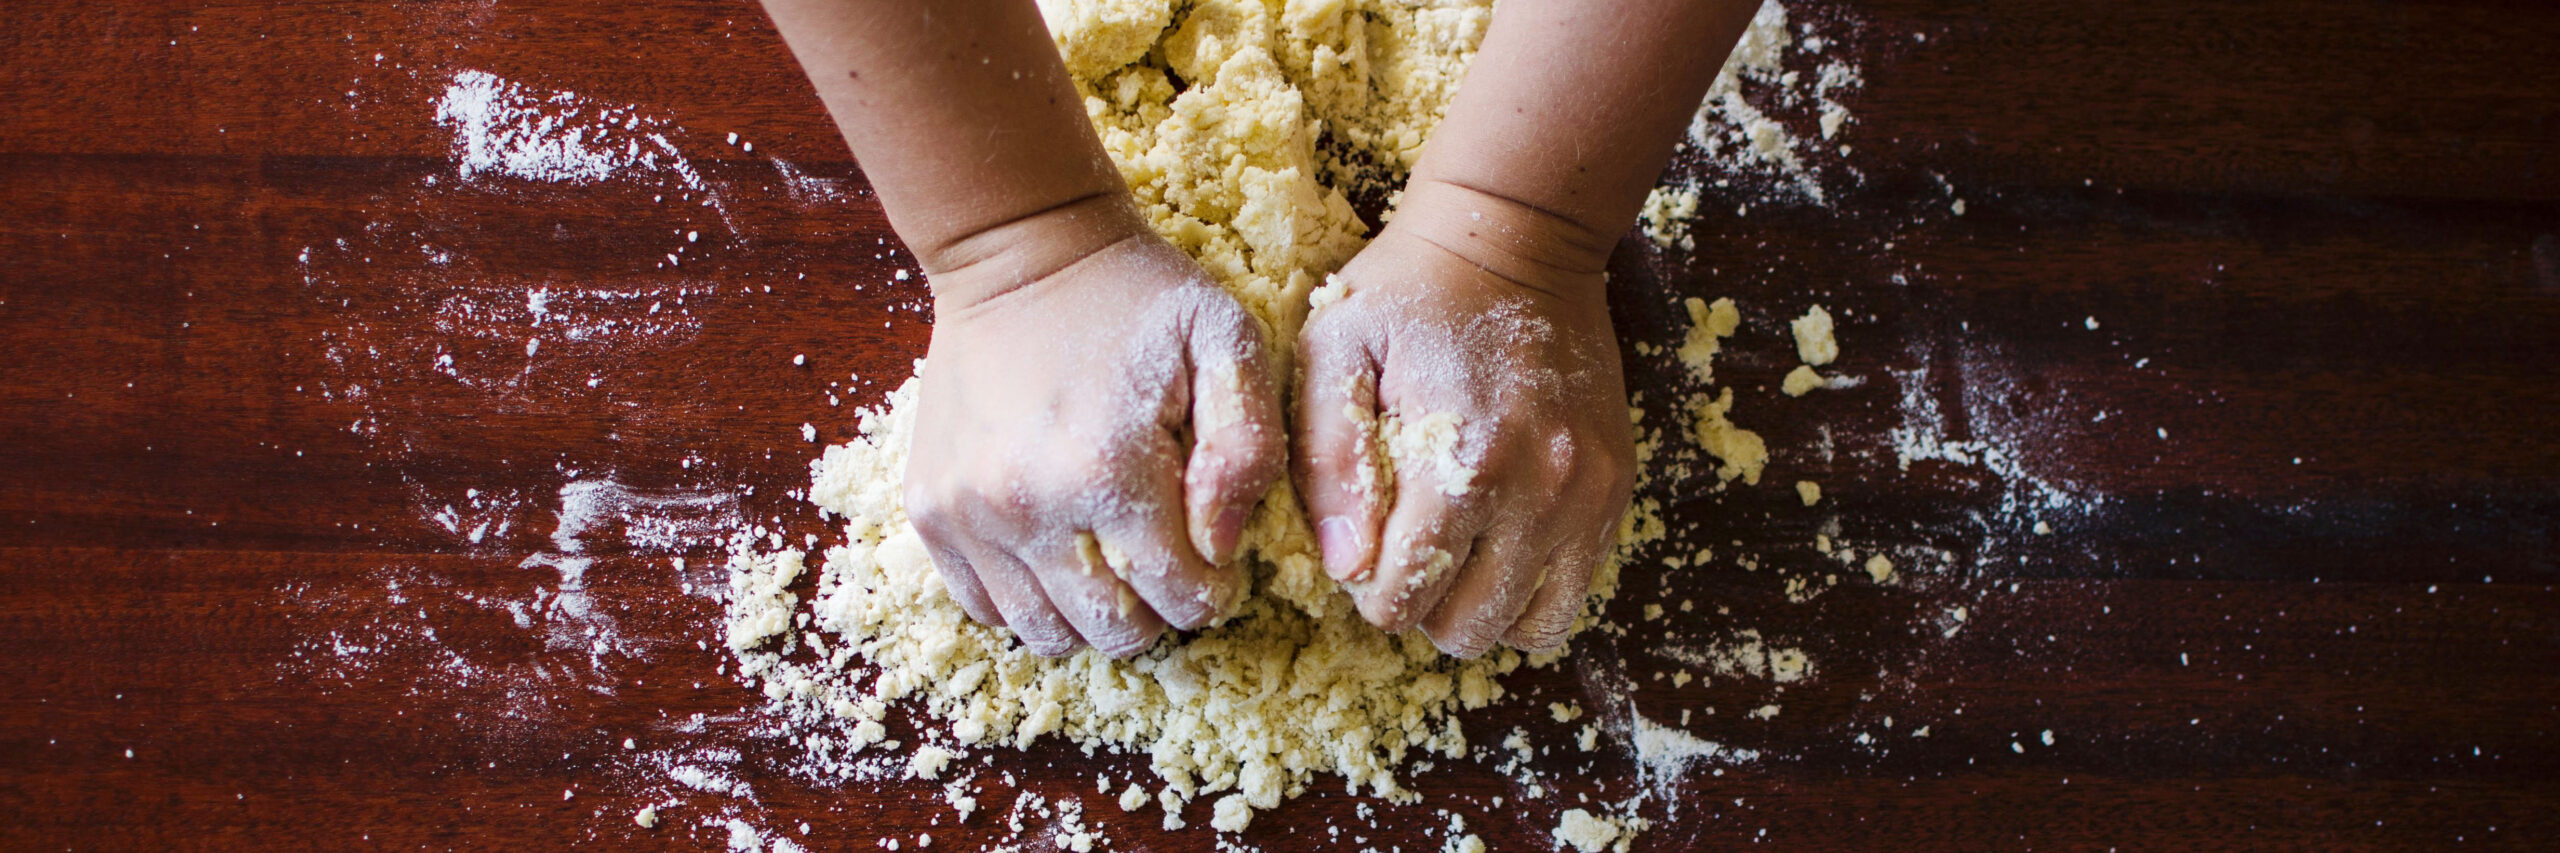 hands kneeding gluten free dough BANNER